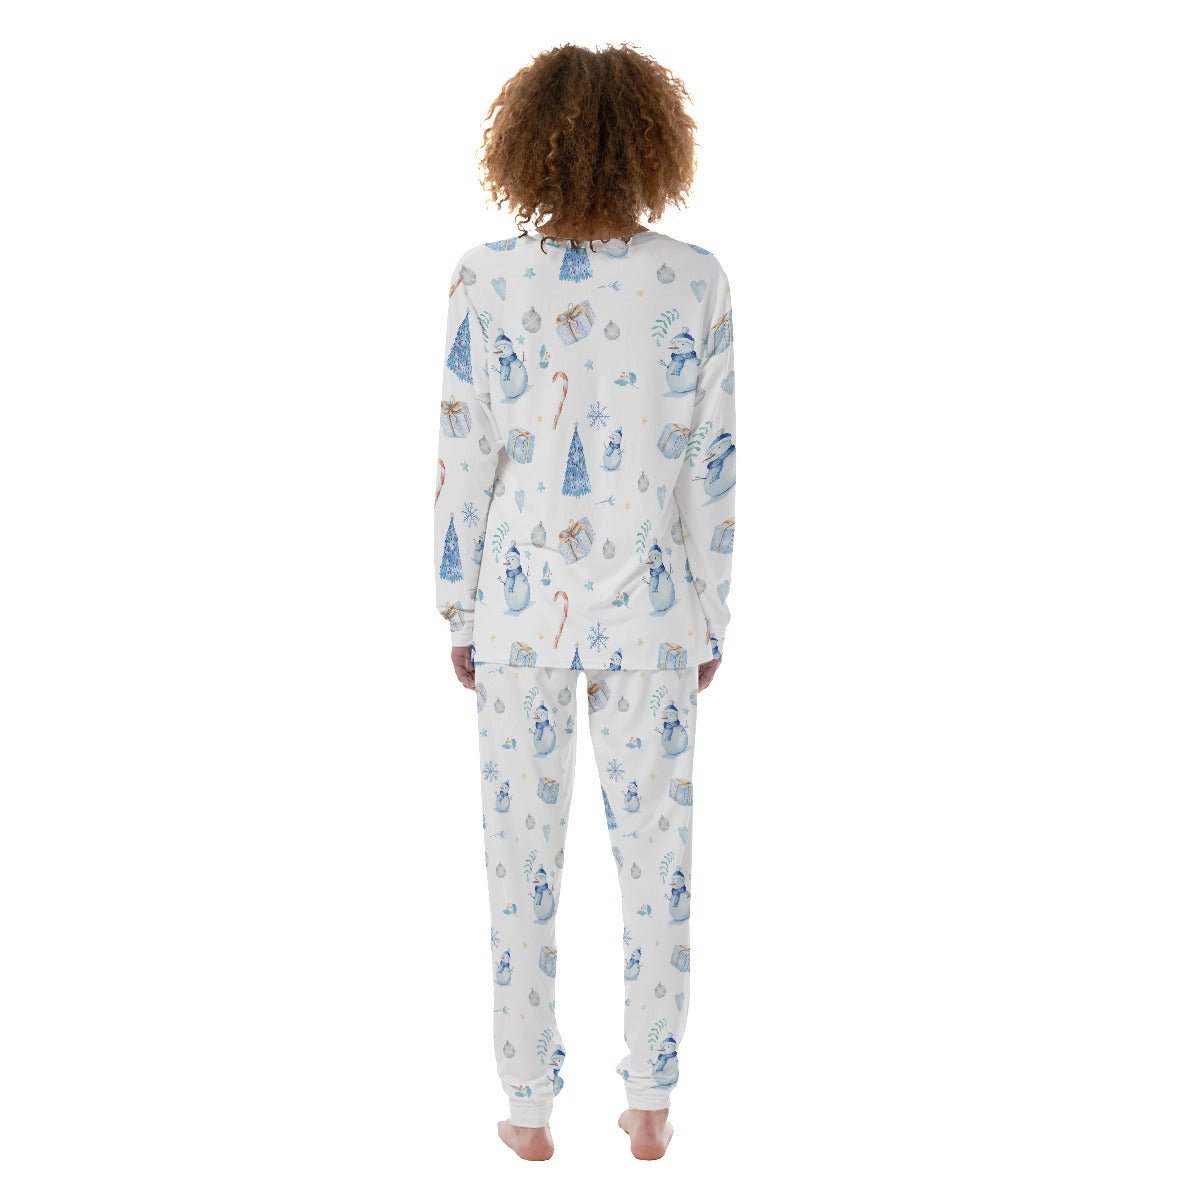 Women's Christmas Pyjamas - Blue - Festive Style